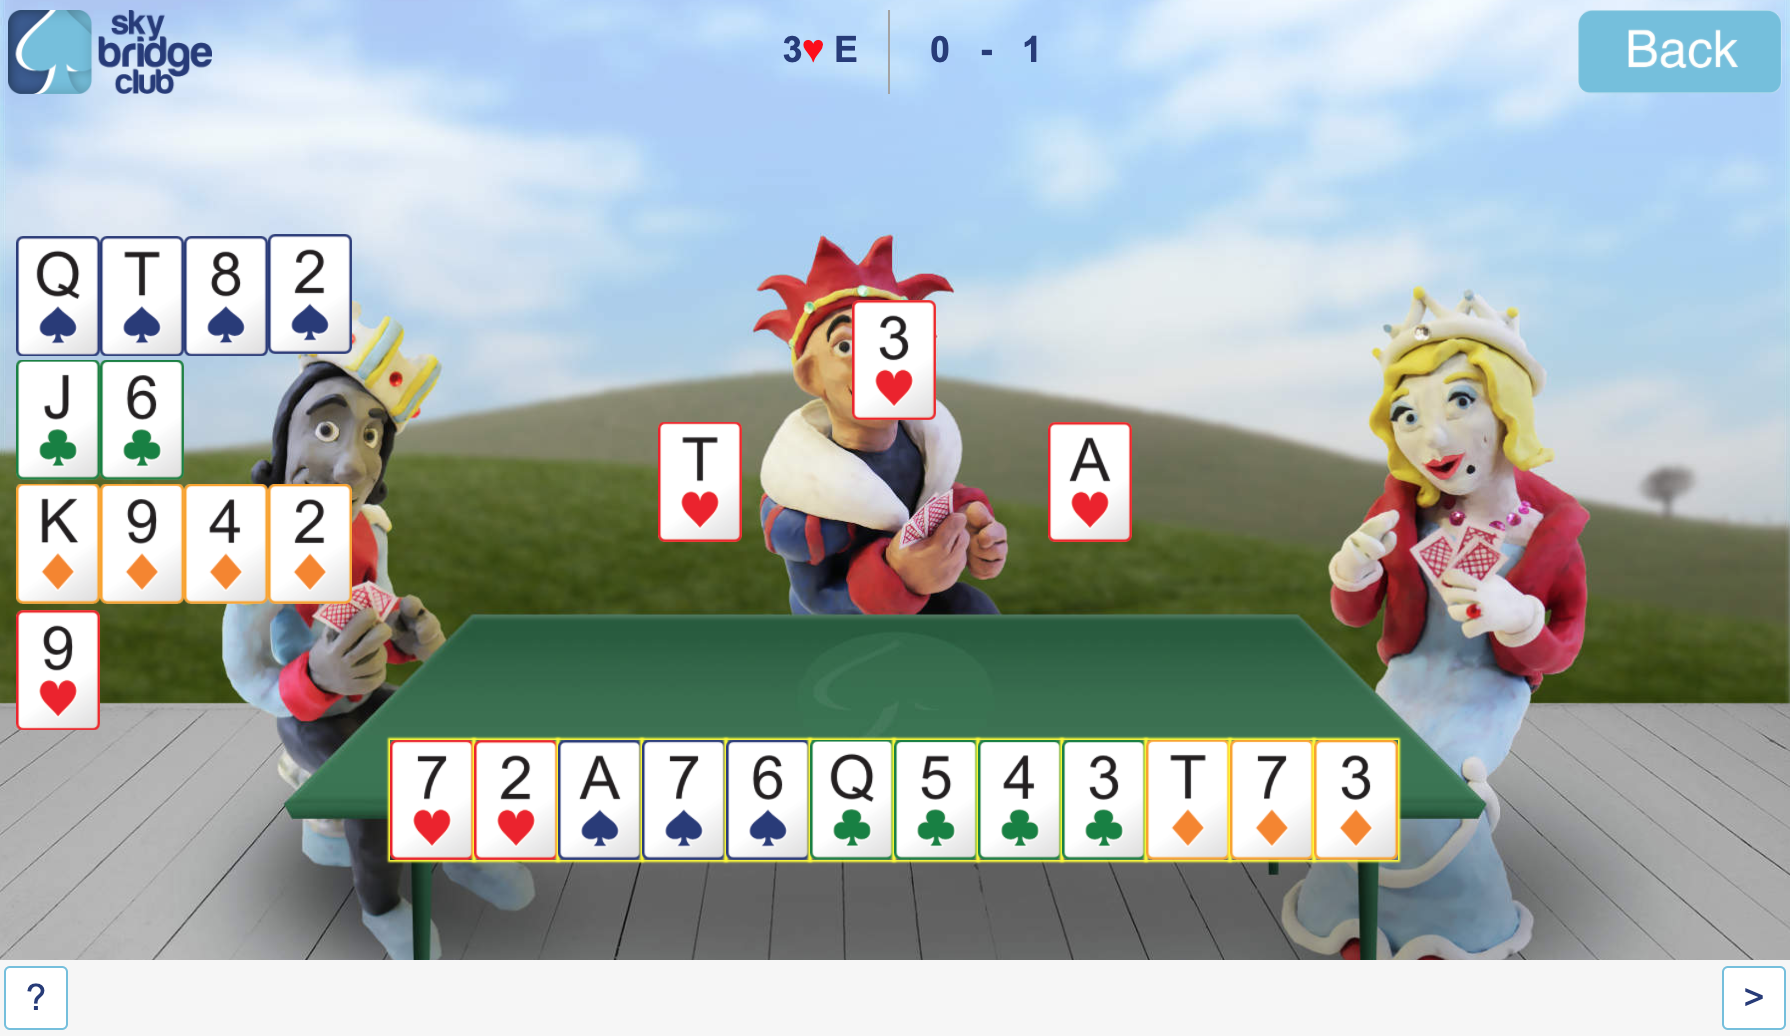 image of sky bridge club game screen